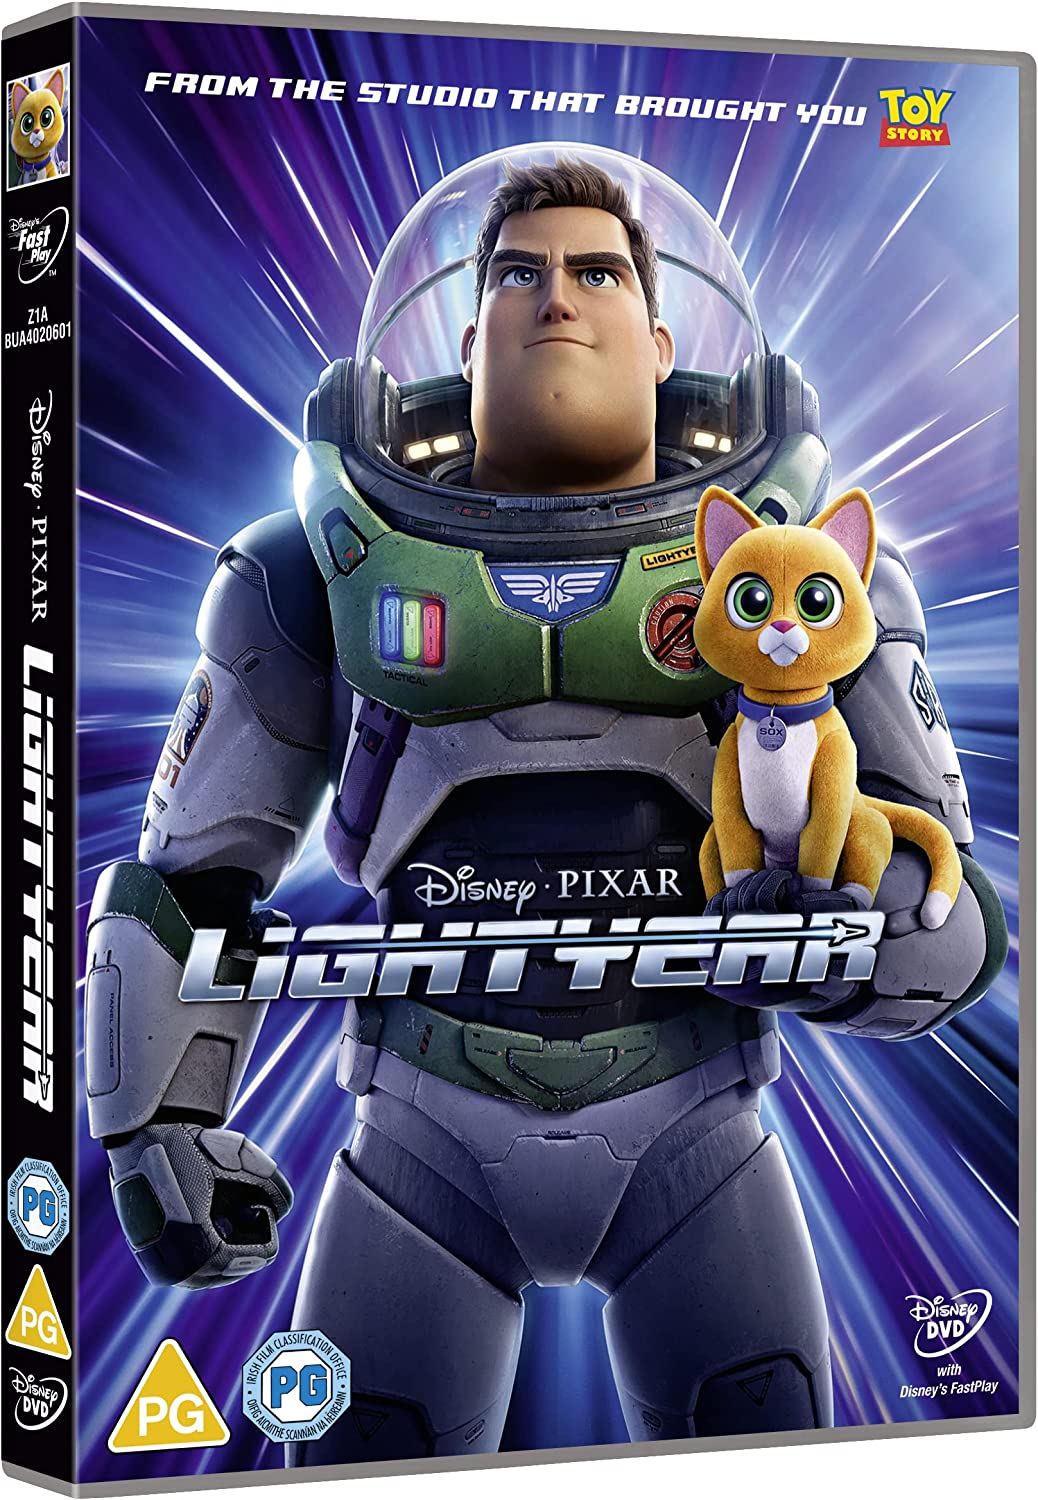 Disney & Pixar's Lightyear - Action Adventure [DVD]